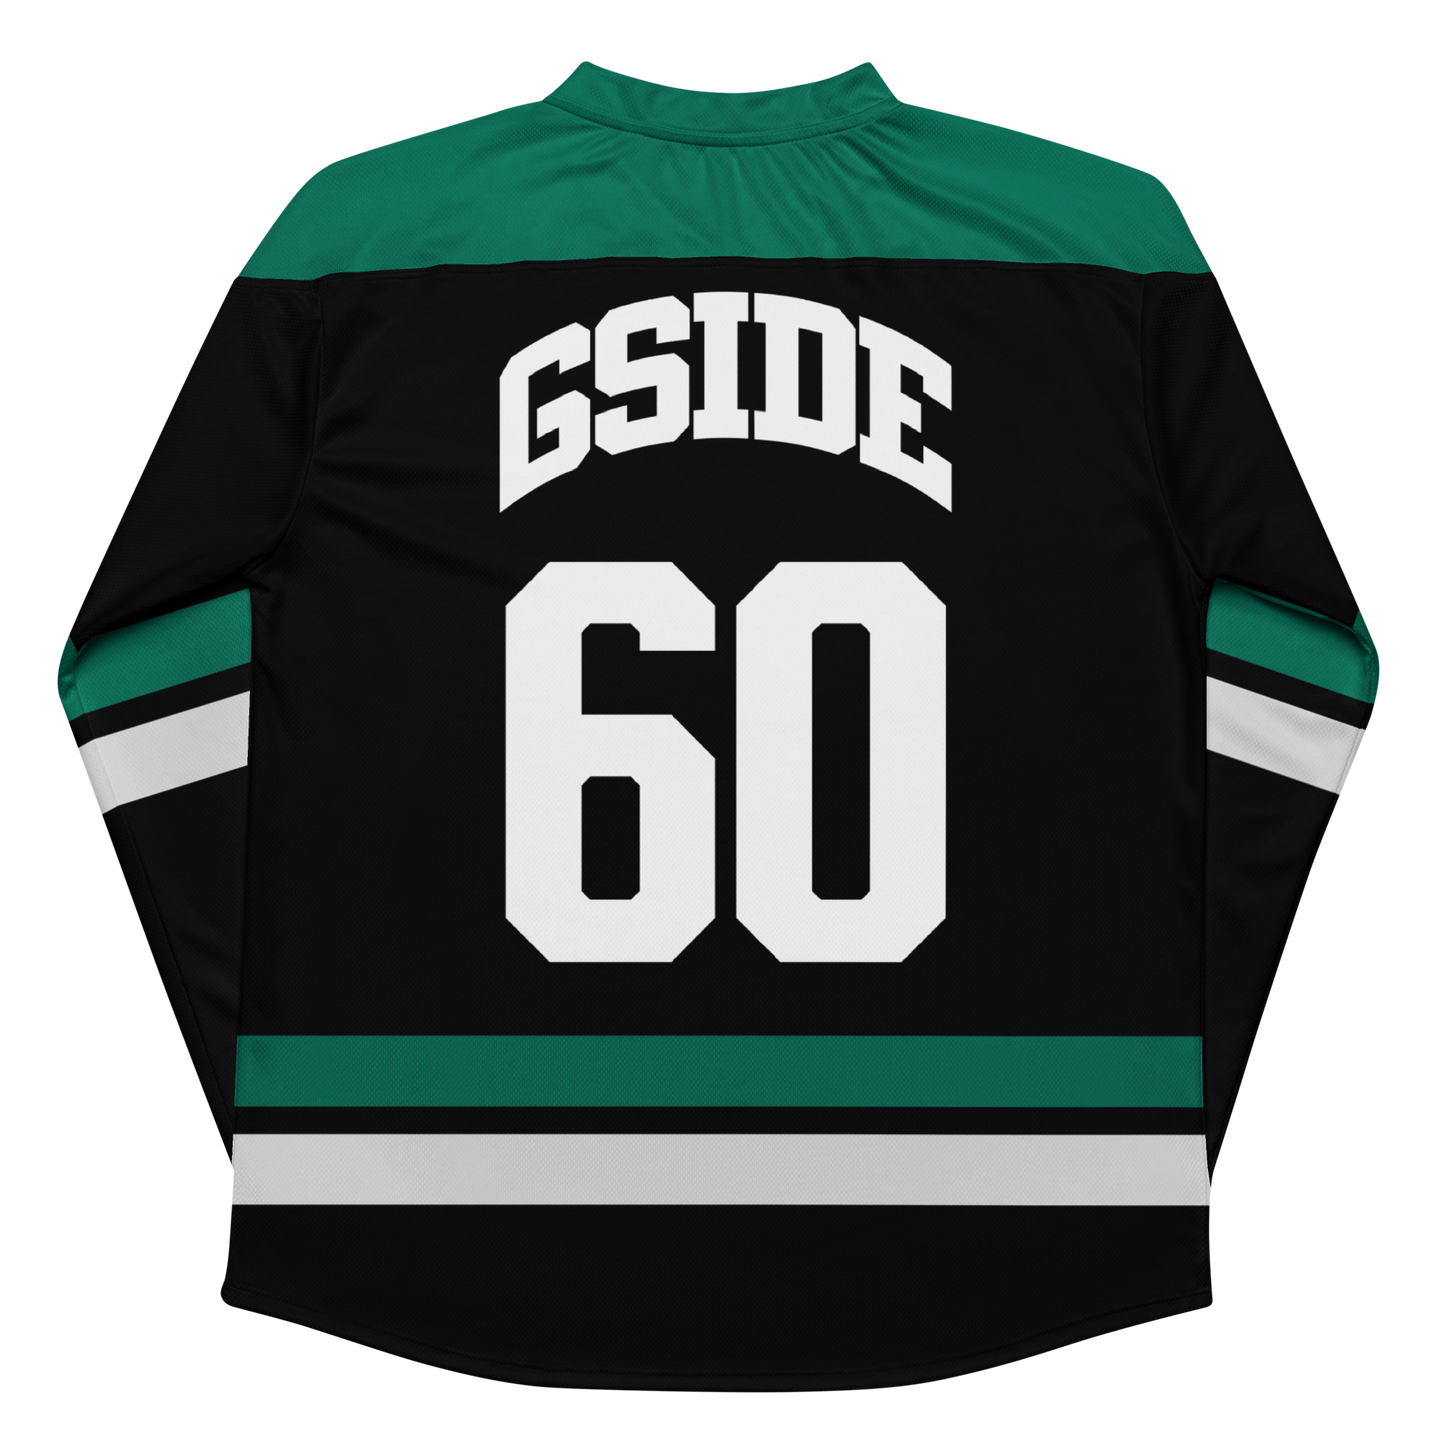 Gside Hockey Trikot - Green